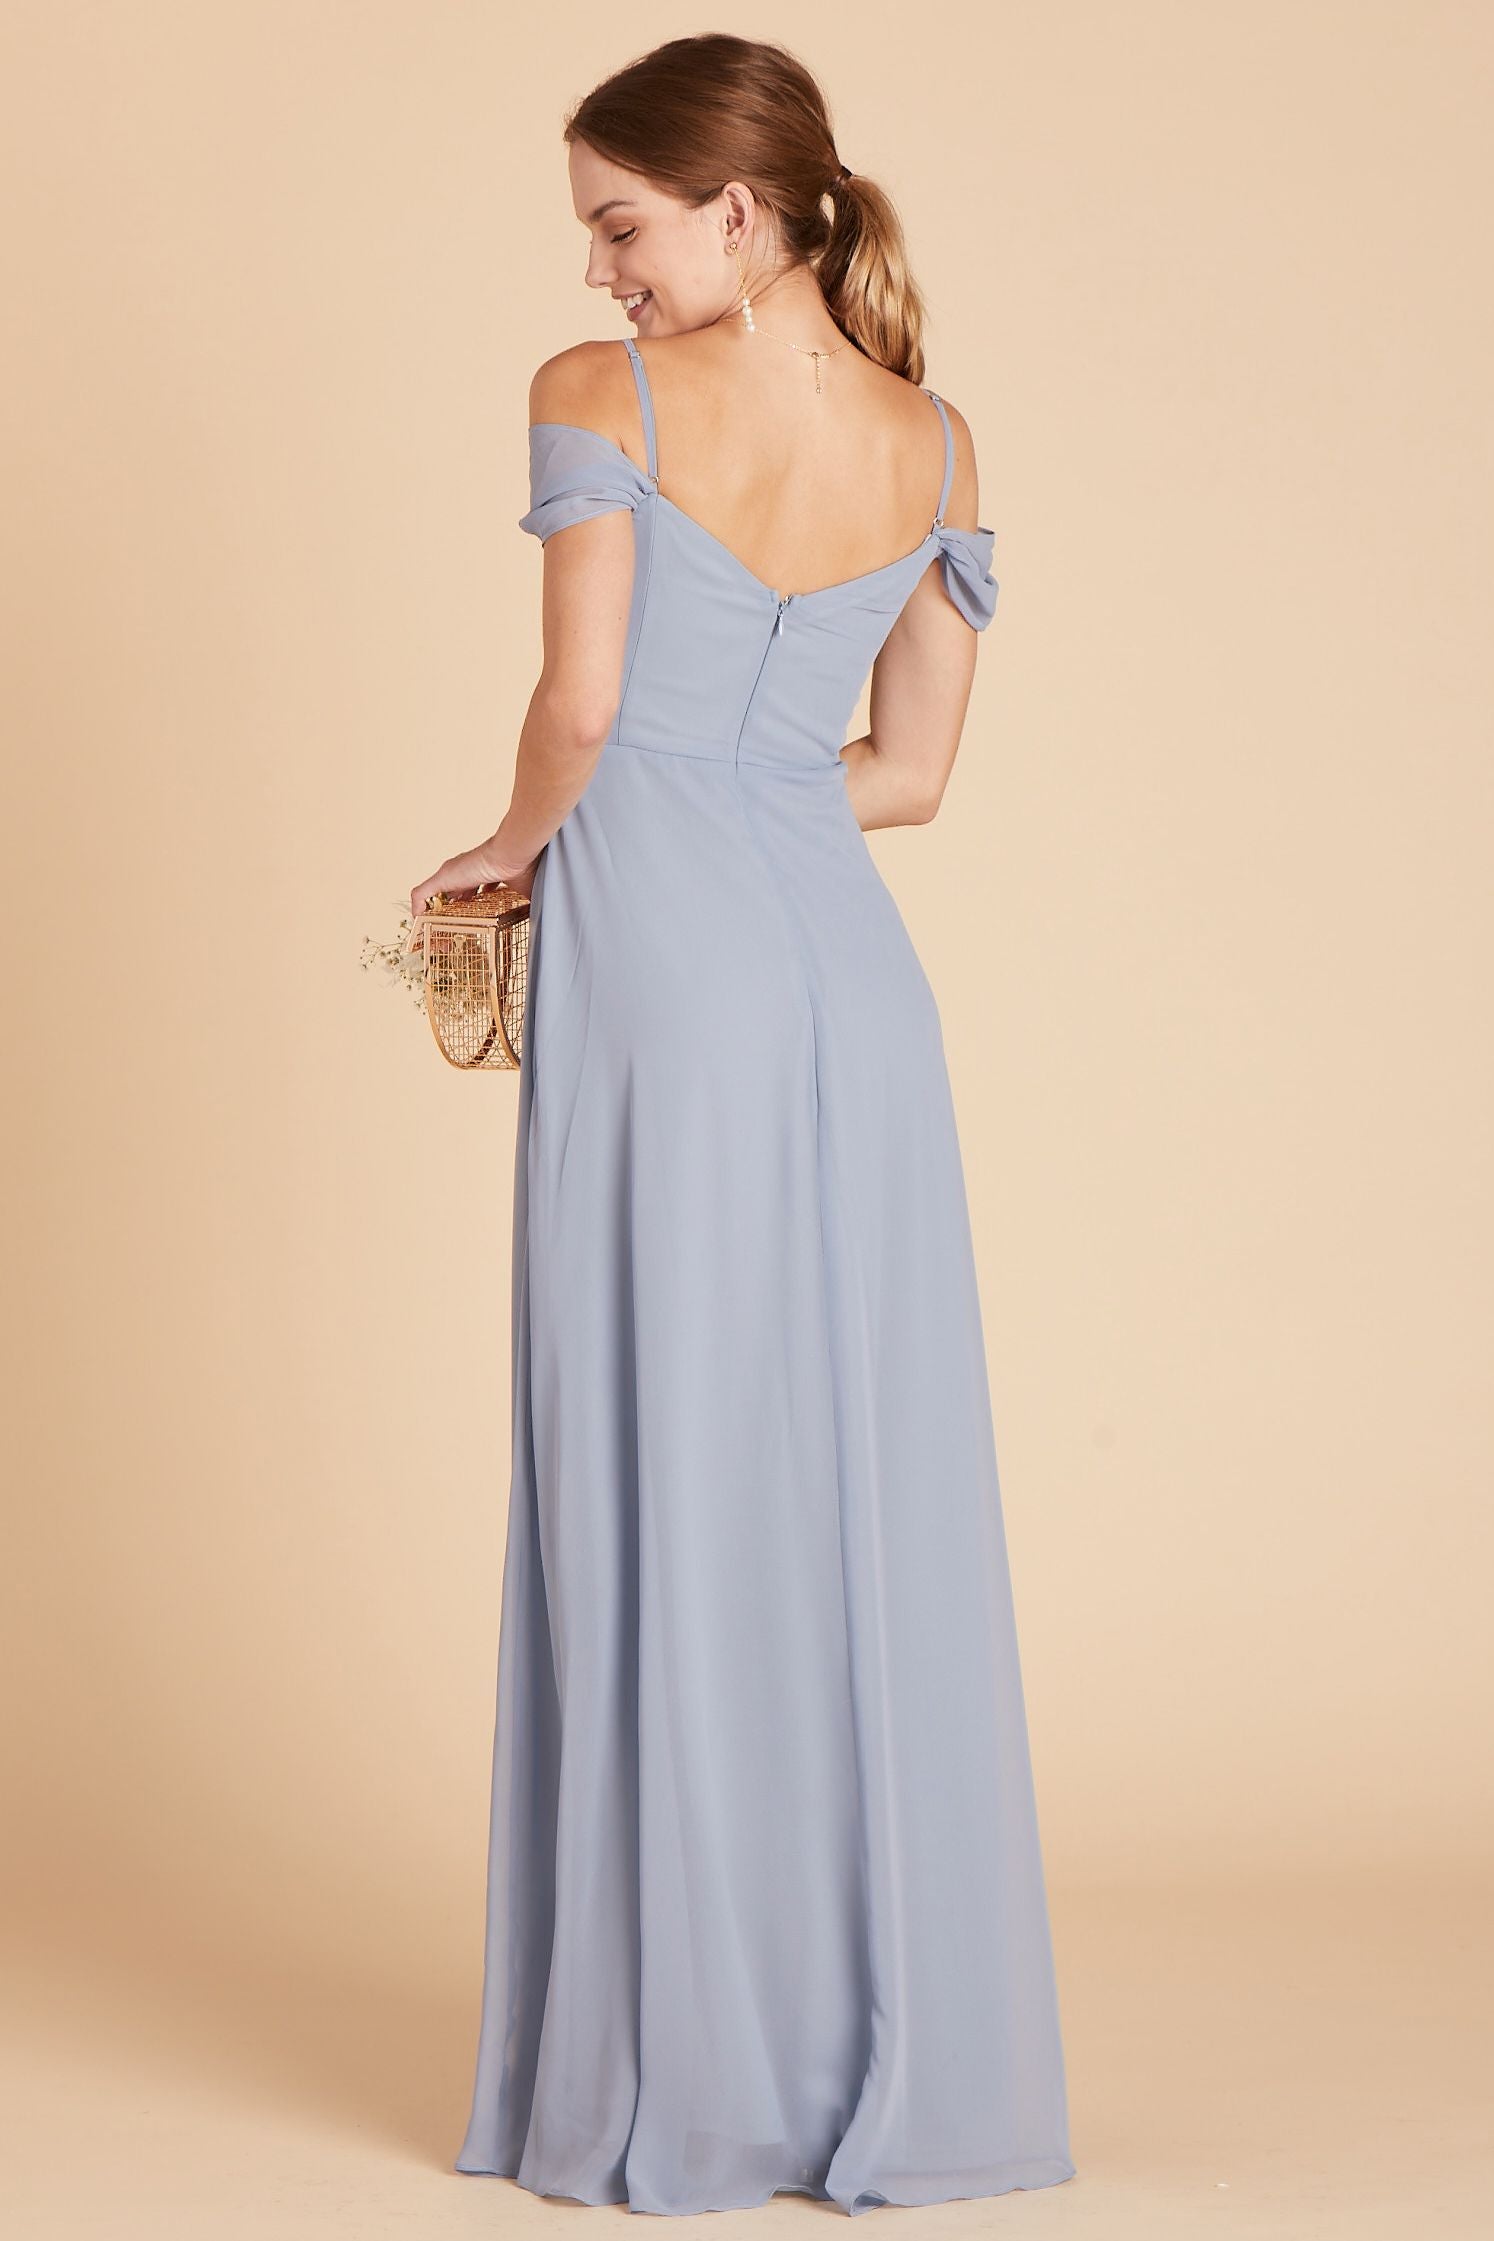 Spence Convertible Dress - Dusty Blue